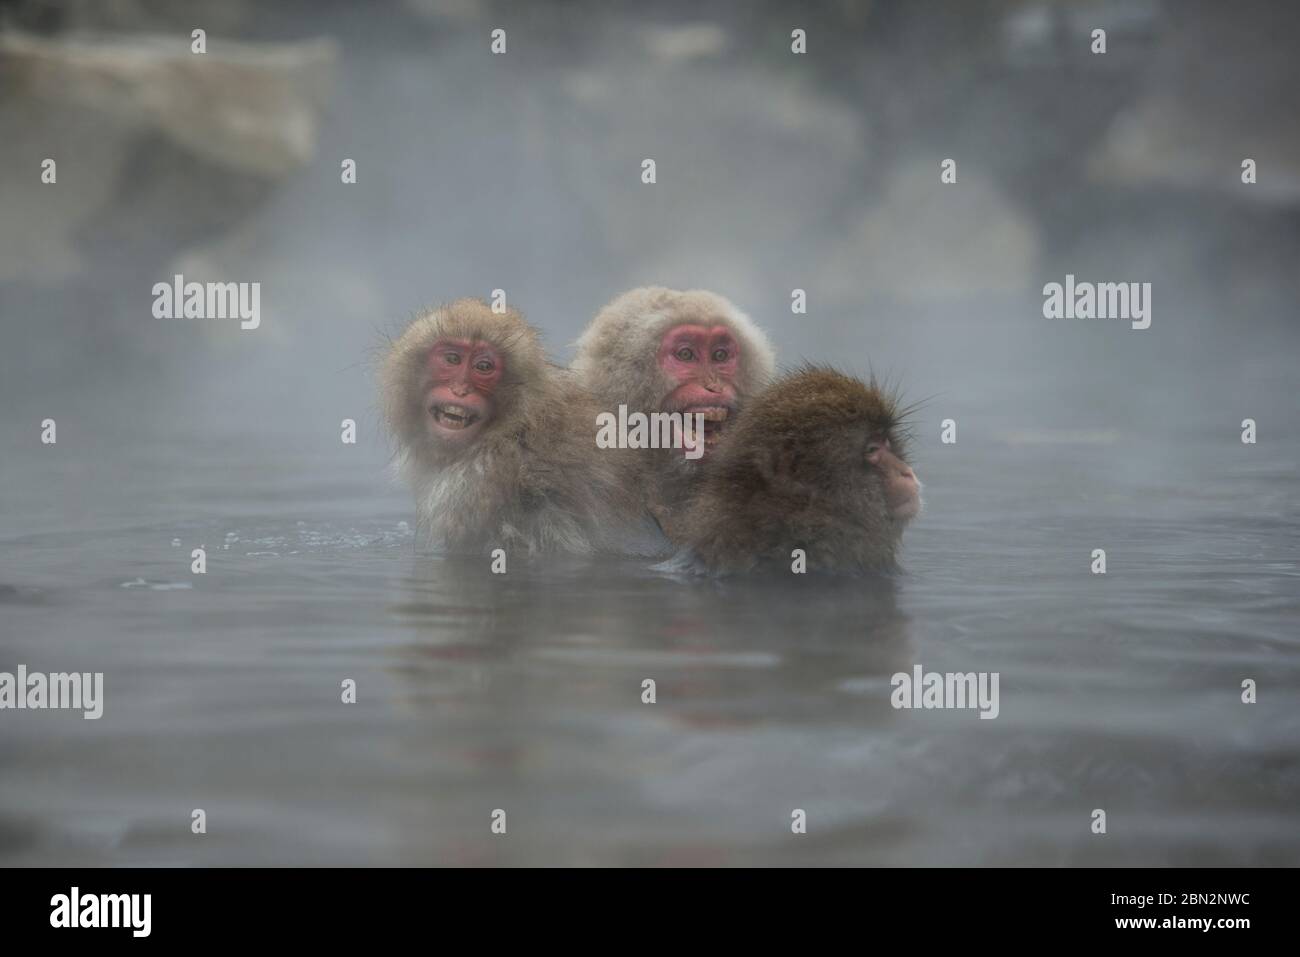 Japanese Macaque Monkey, Macaca fuscata, shrieking as shocked in hot spring bath, Jigokudani Yaenkoen Monkey Park, Yamanouchi, Nagano, Japan Stock Photo